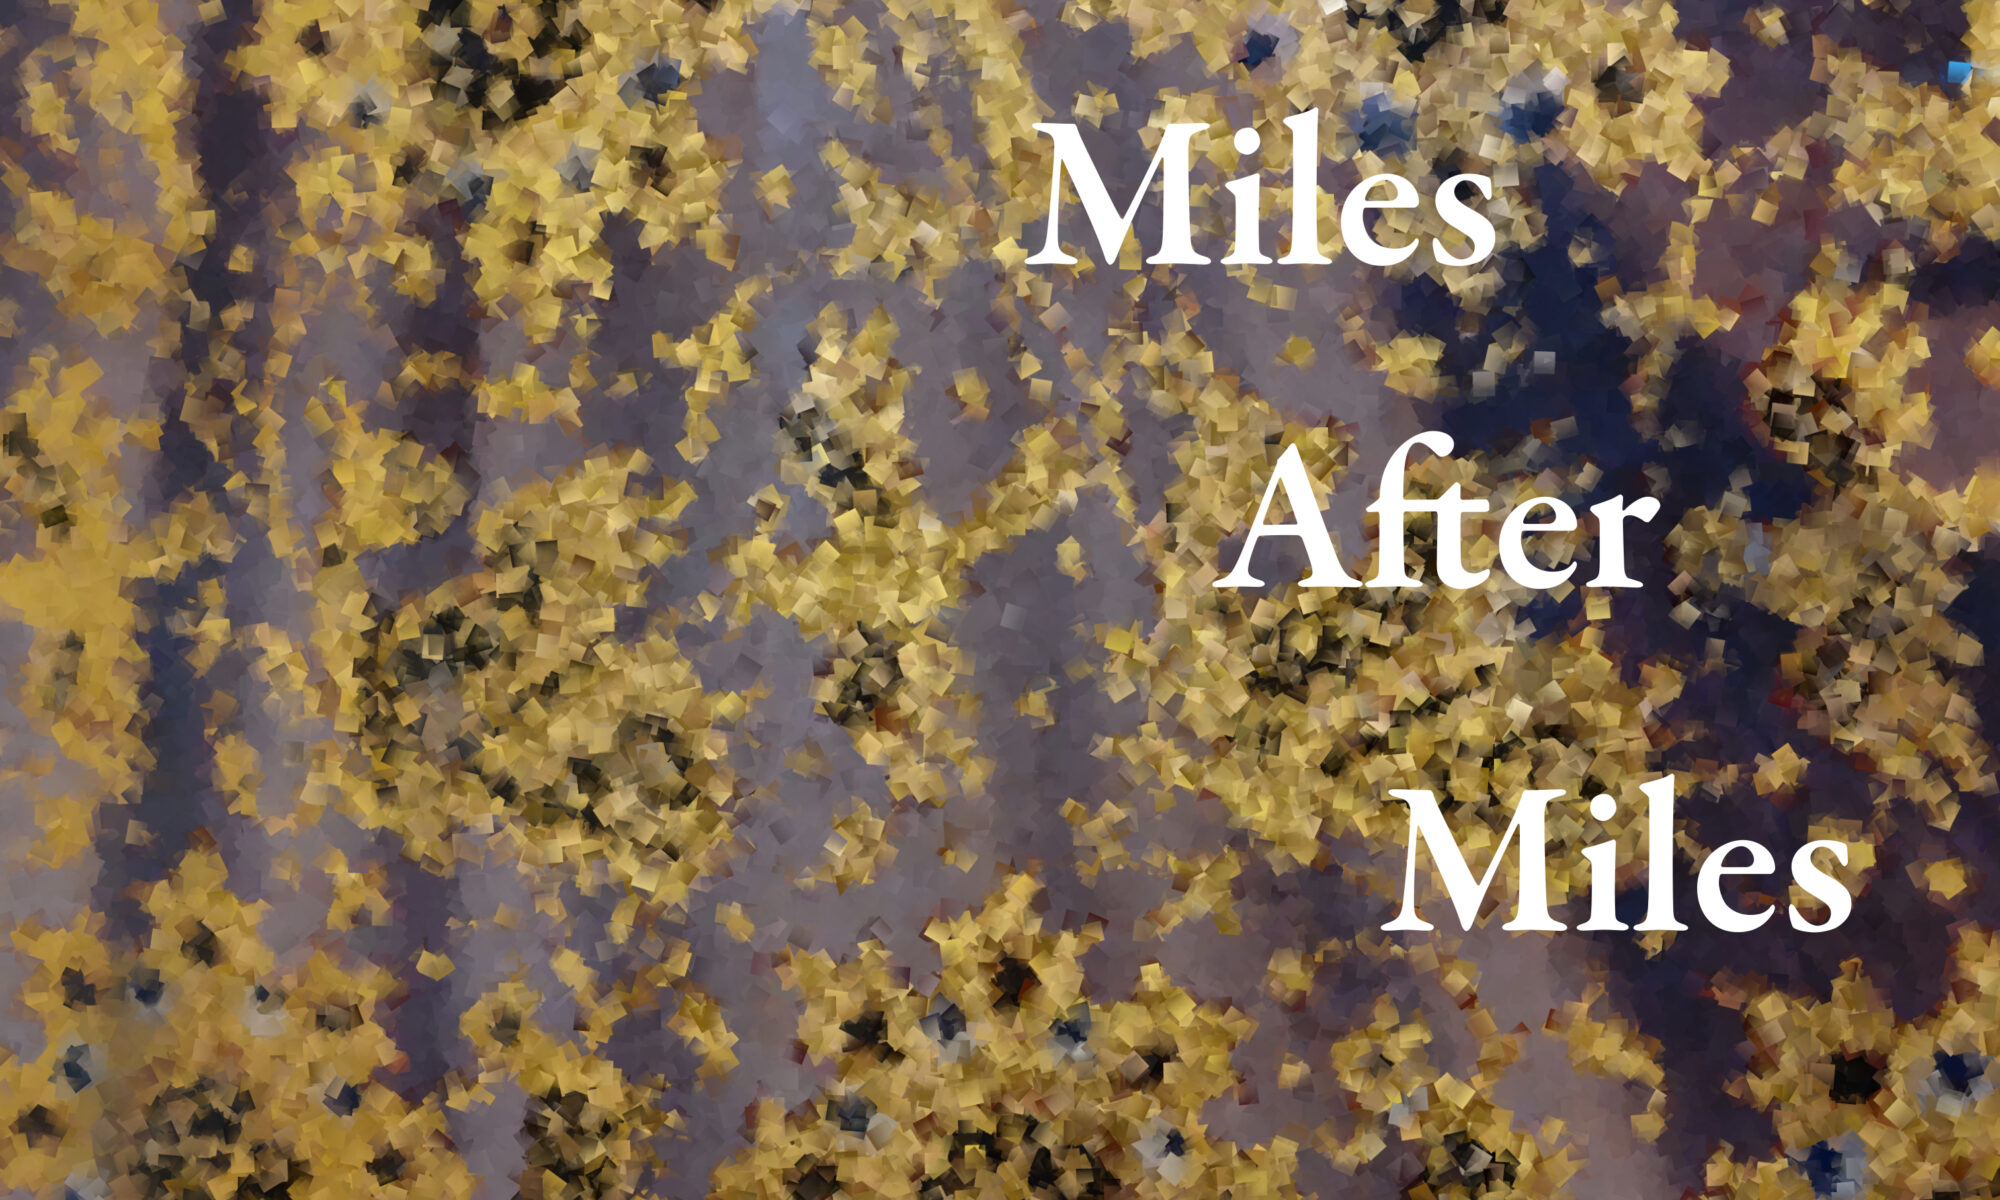 Miles After Miles by Elijax